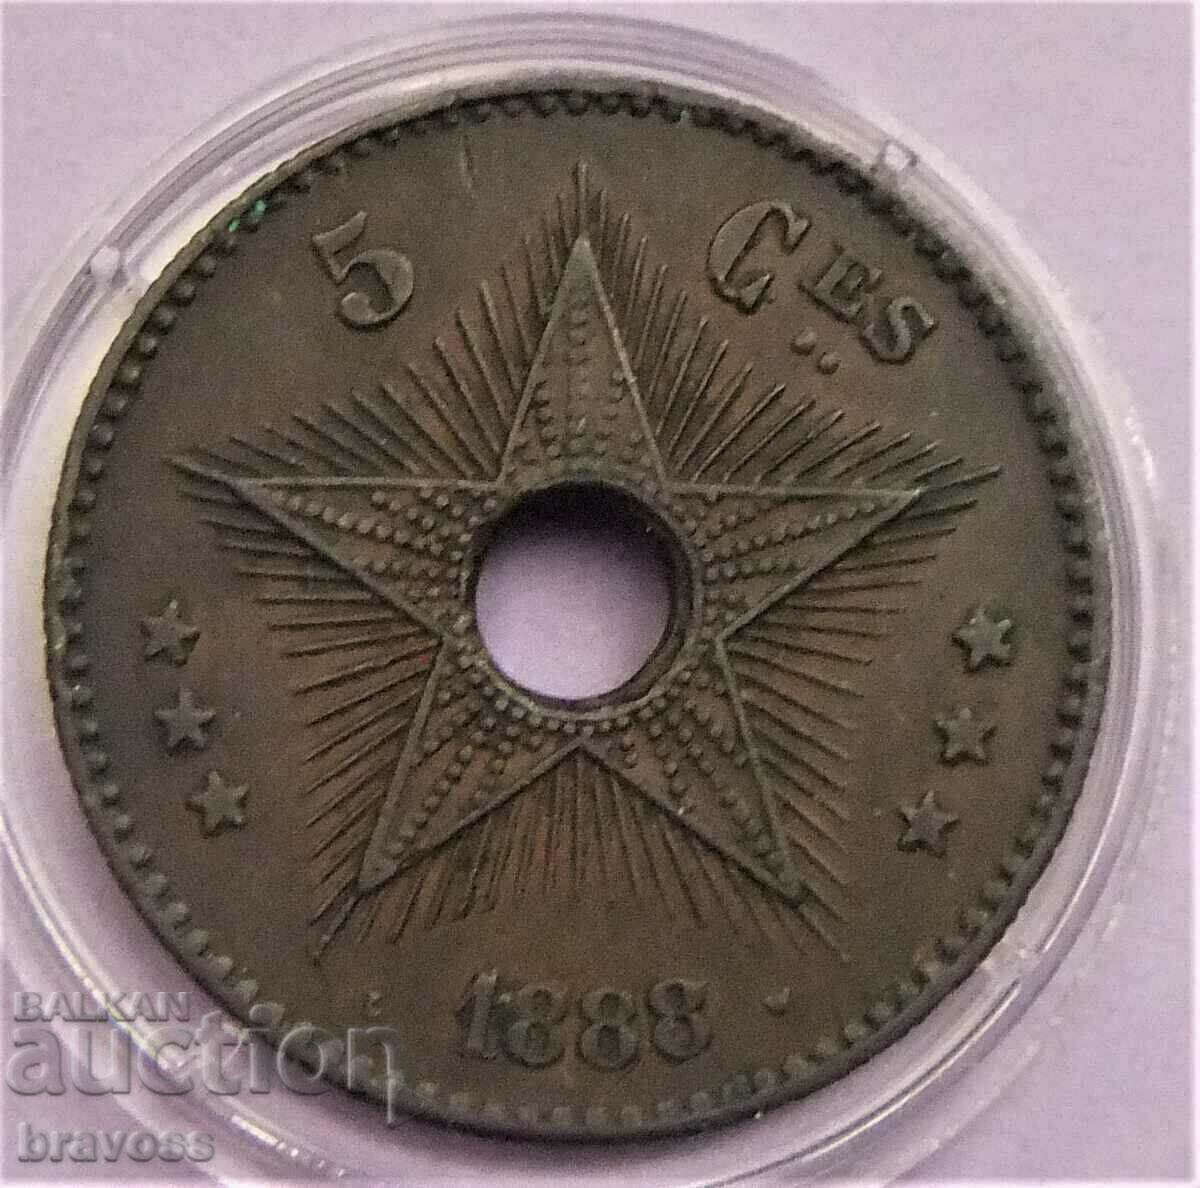 Belgian Congo - 5 cents 1888